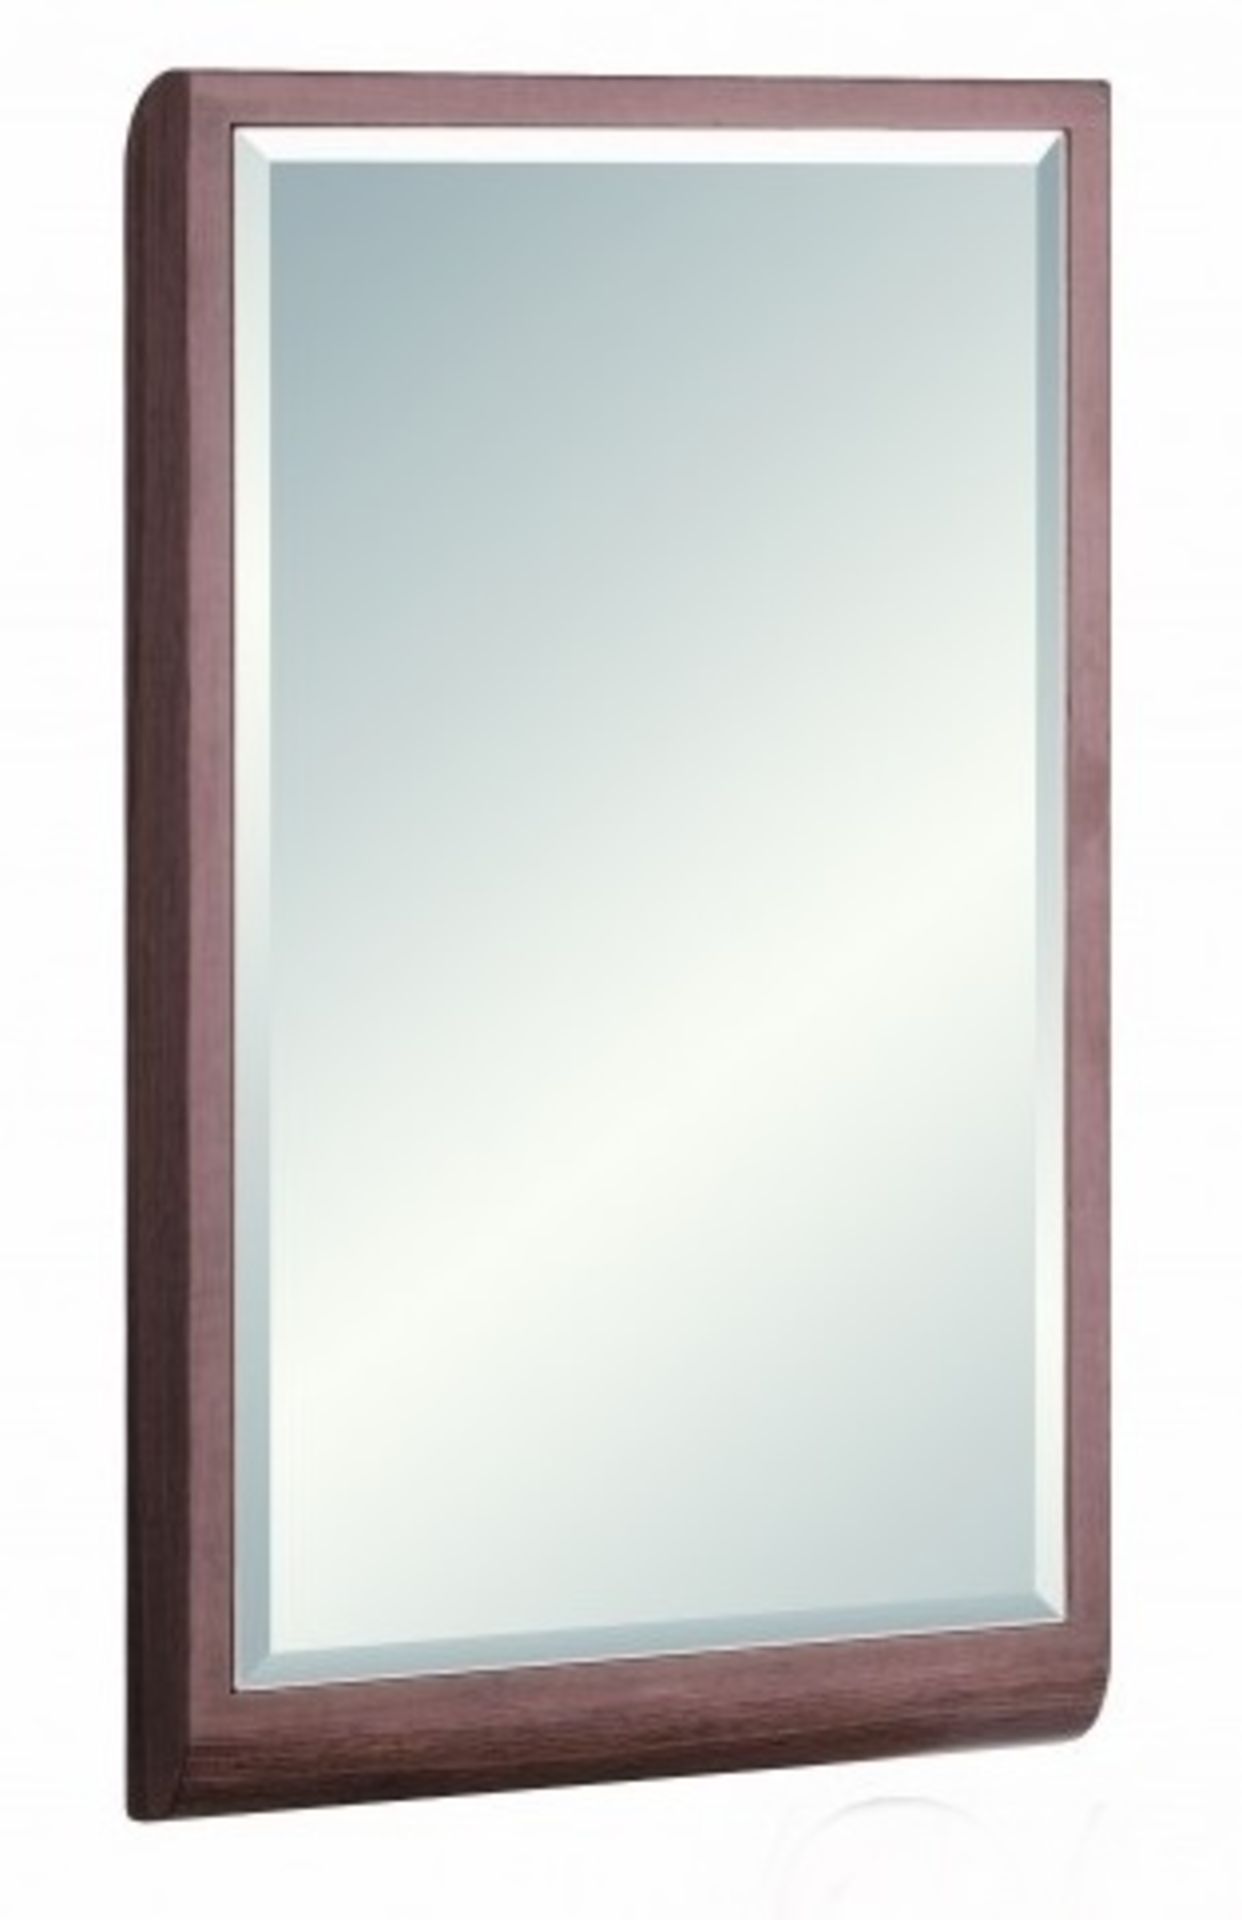 1 x Vogue ARC Bathroom Wall Mirror - WALNUT FINISH - Series 1 600x350mm - Manufactured to the